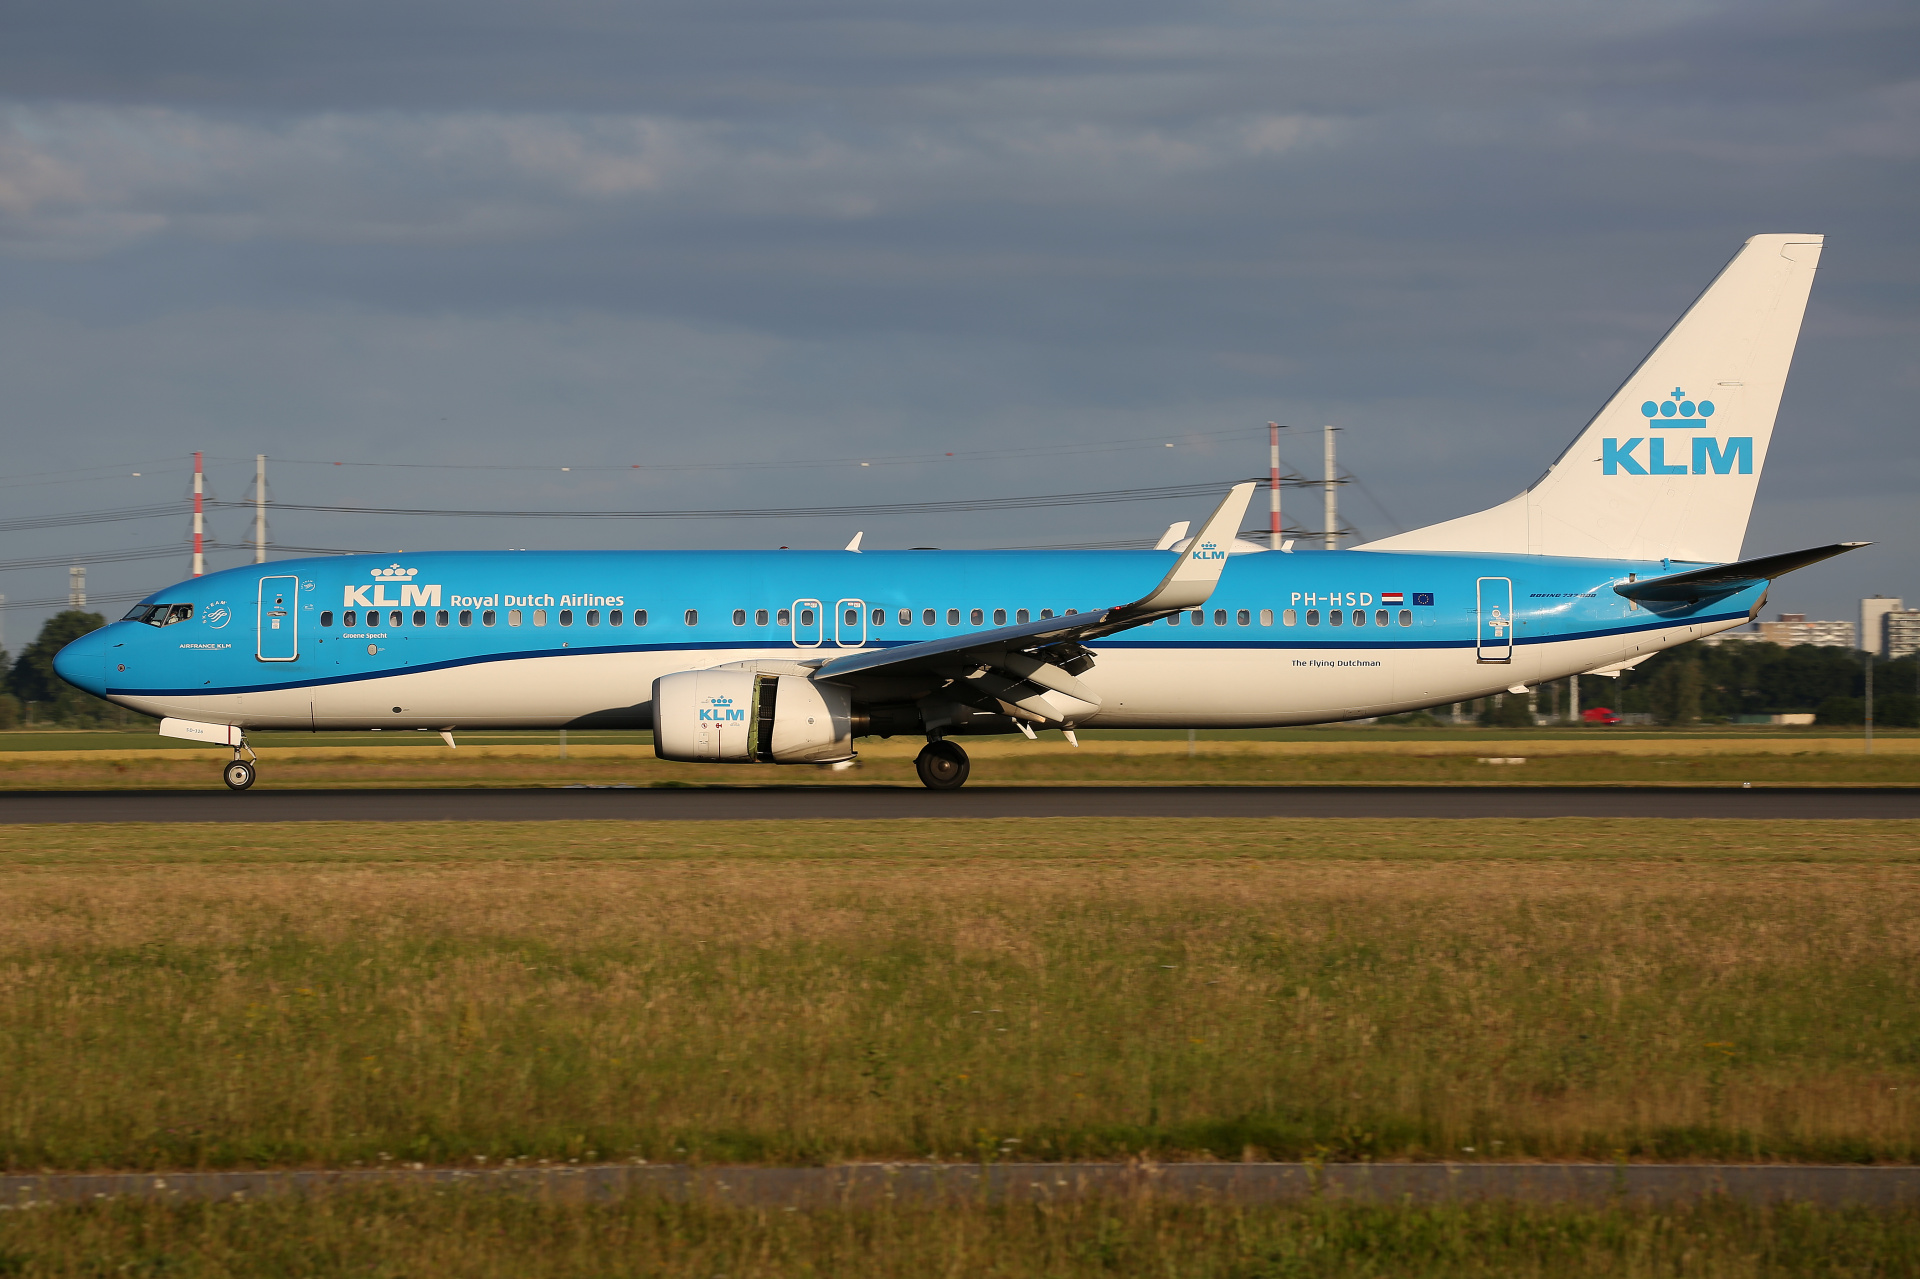 PH-HSD (Aircraft » Schiphol Spotting » Boeing 737-800 » KLM Royal Dutch Airlines)